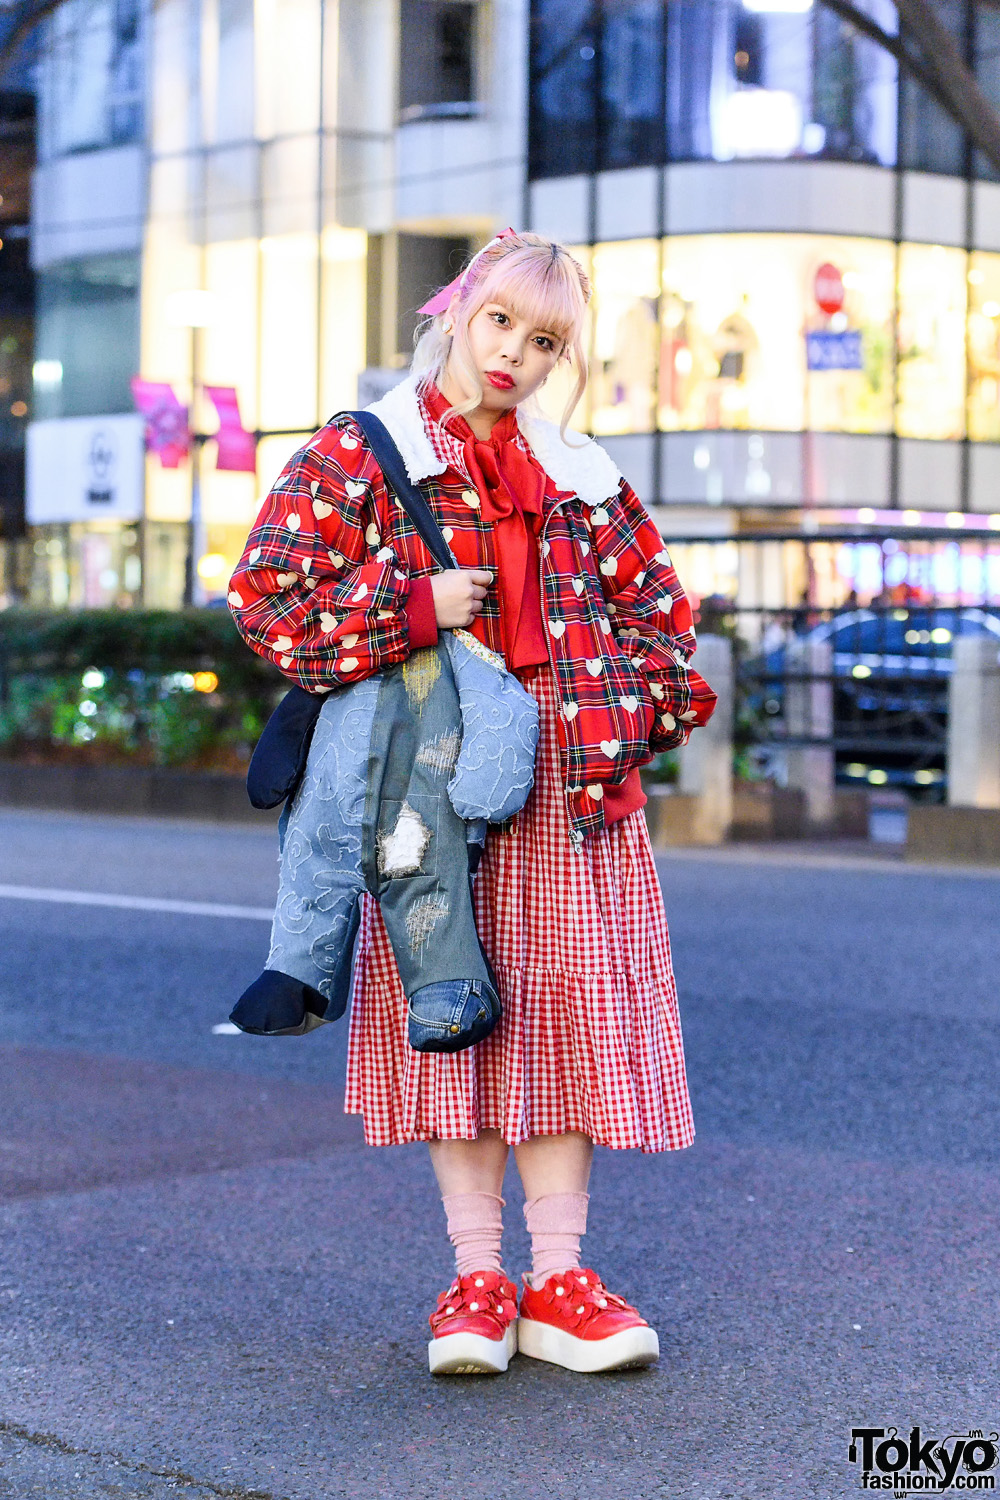 Red HEIHEI Streetwear Style w/ Ombre Pink Hair, Gingham Dress, Plaid & Heart Print Jacket, Denim Patchwork Bag & Tokyo Bopper Shoes